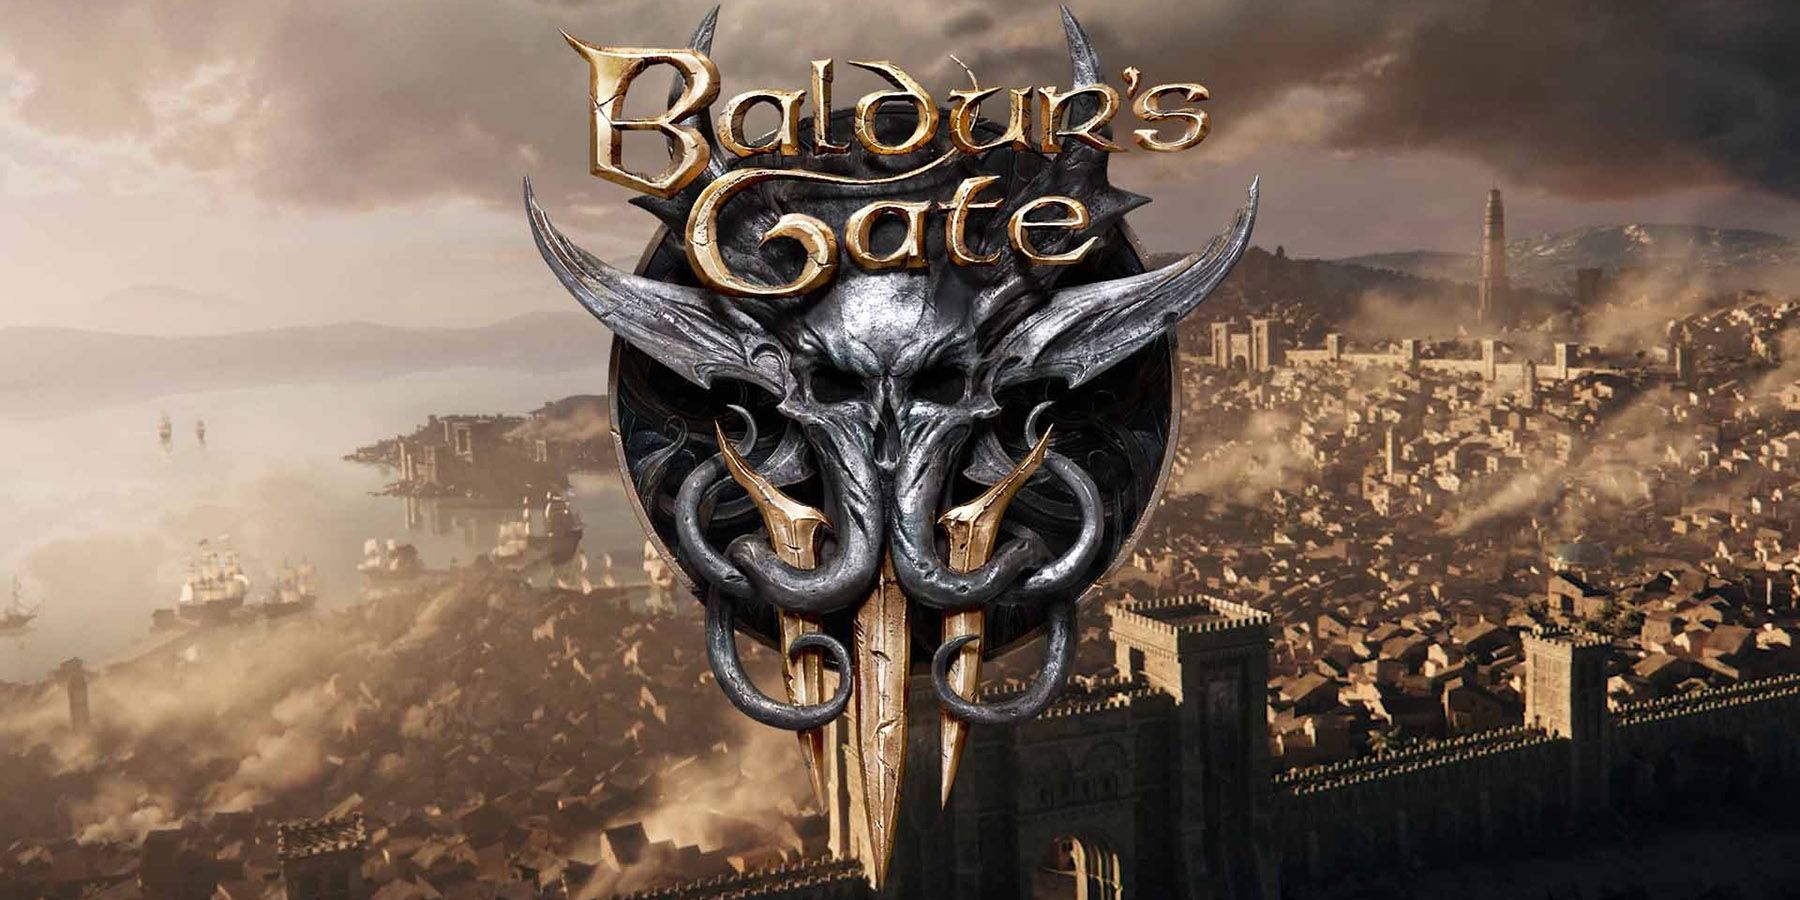 Baldurs Gate 3 III Details